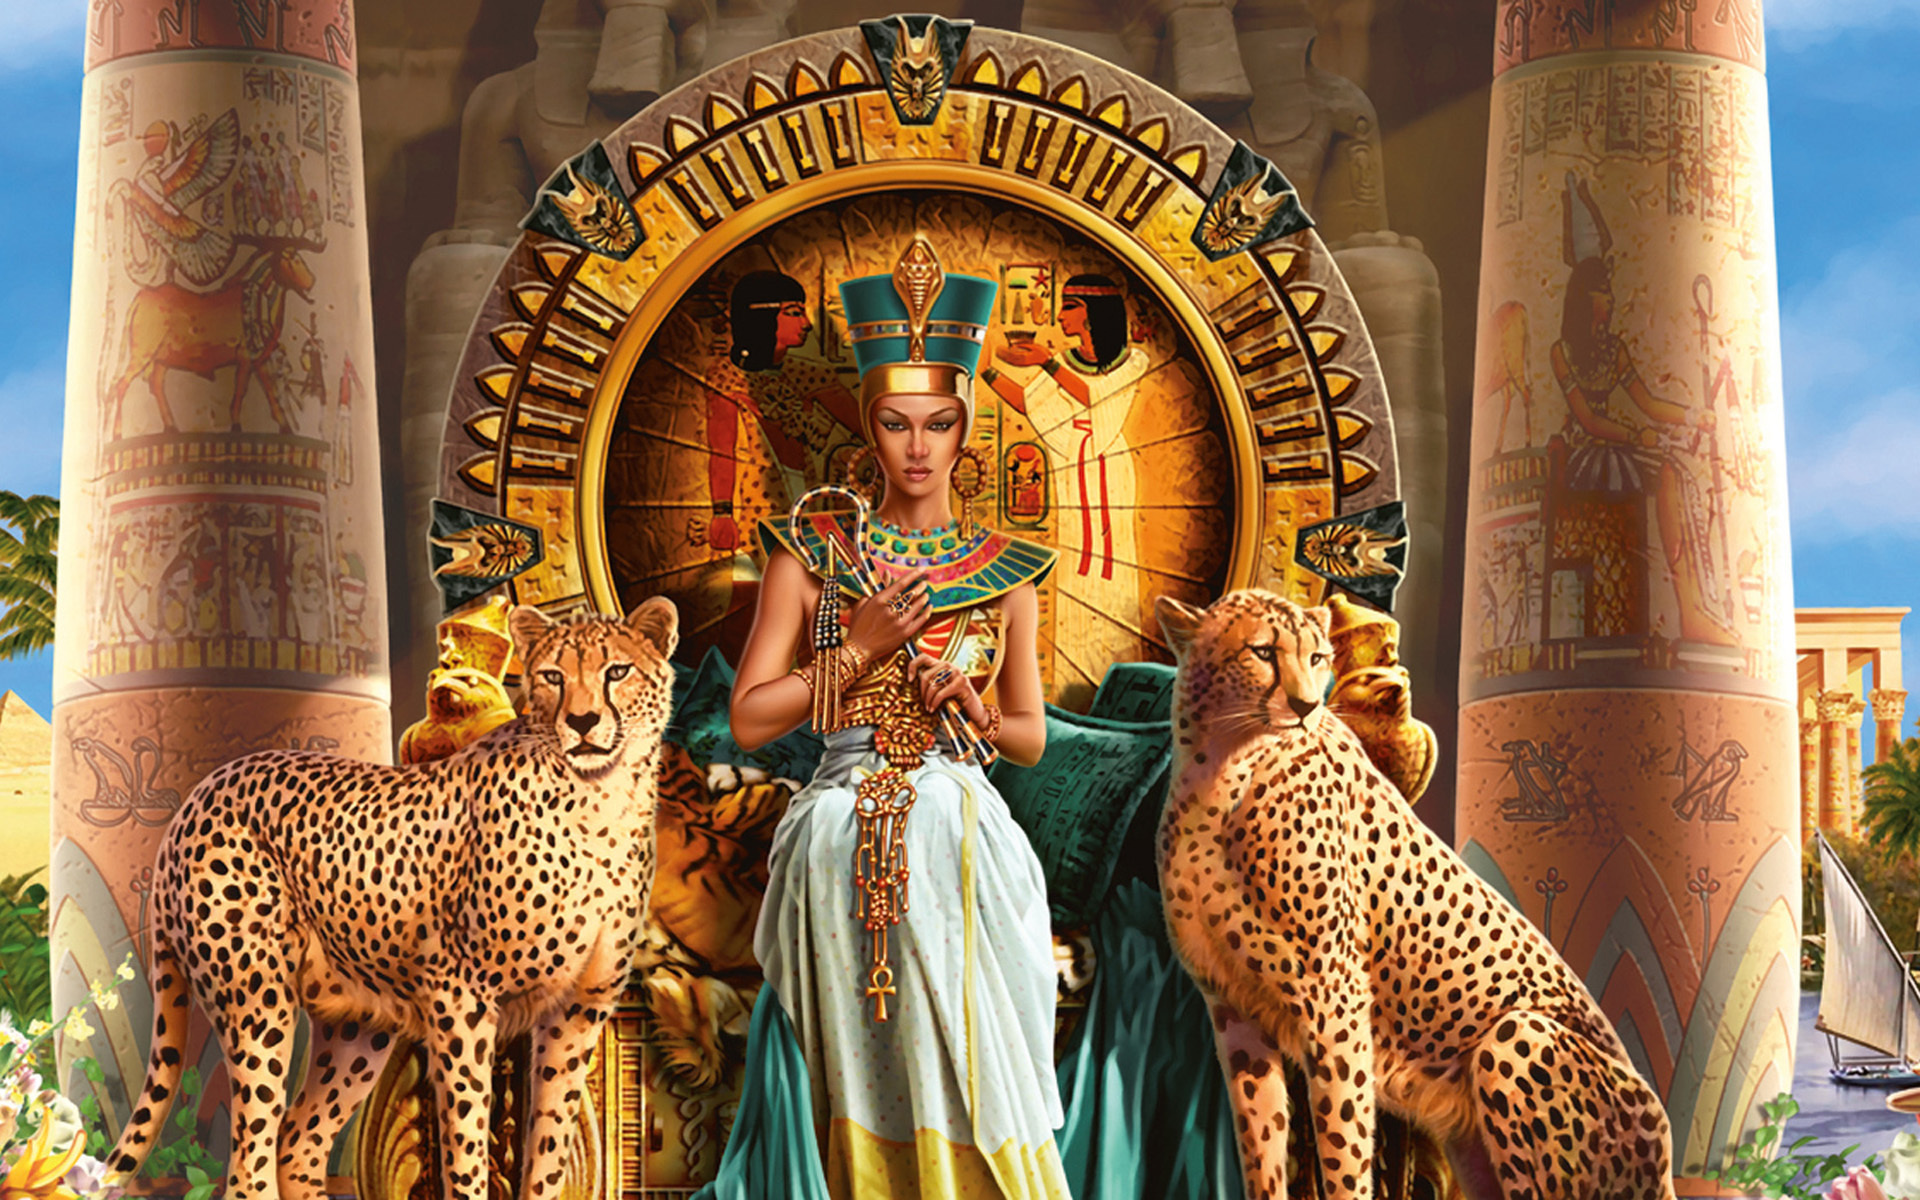 Cleopatra Vii Philopator Pharaoh Ancient Egypt Ptolemaic Dynasty